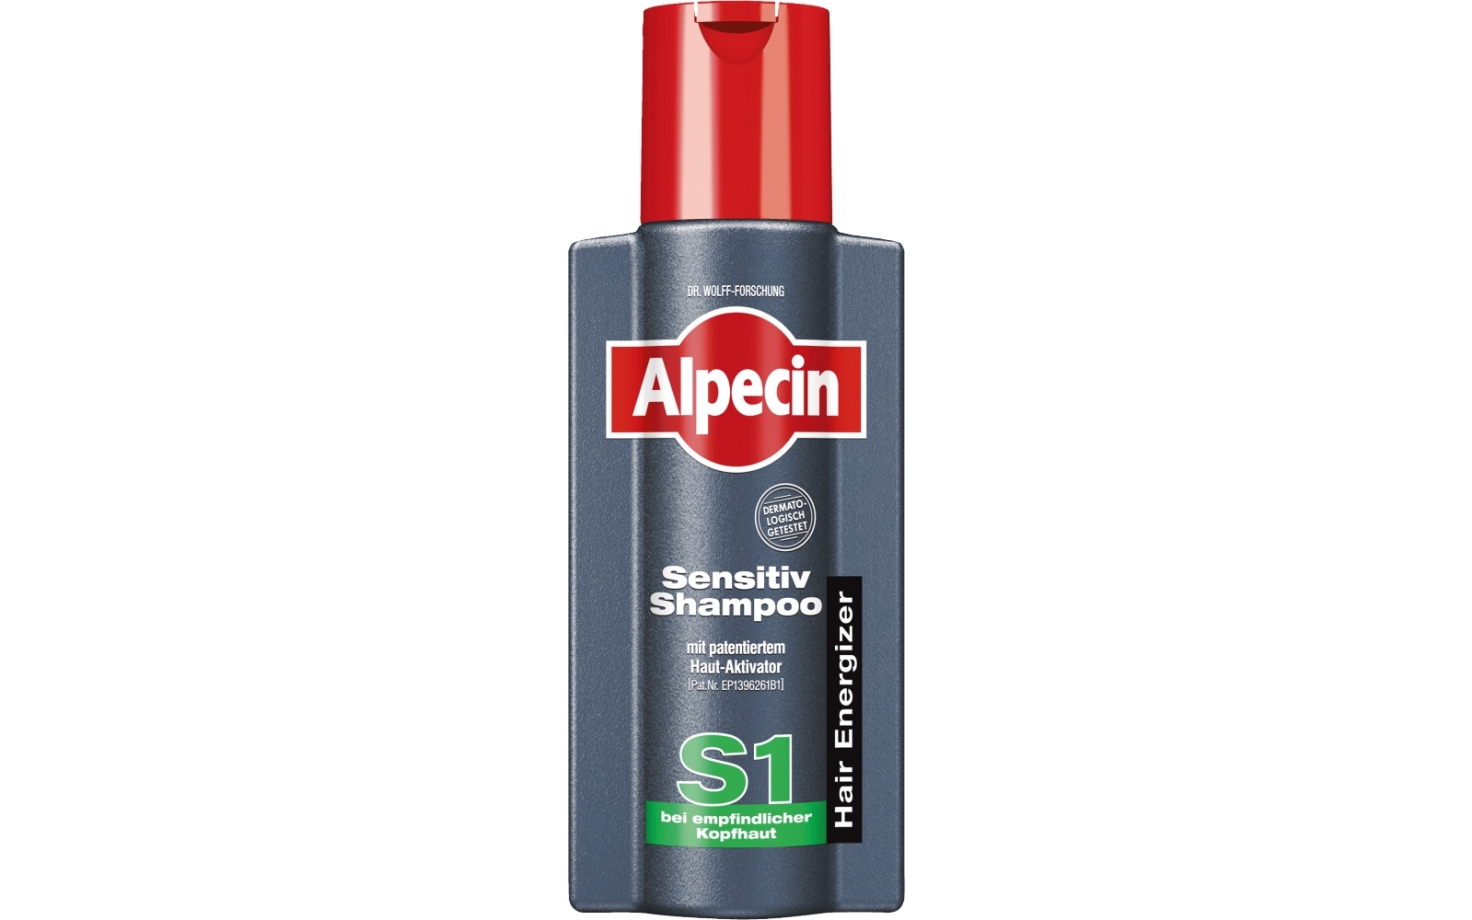 Alpecin Sensitiv Shampoo 250 ml